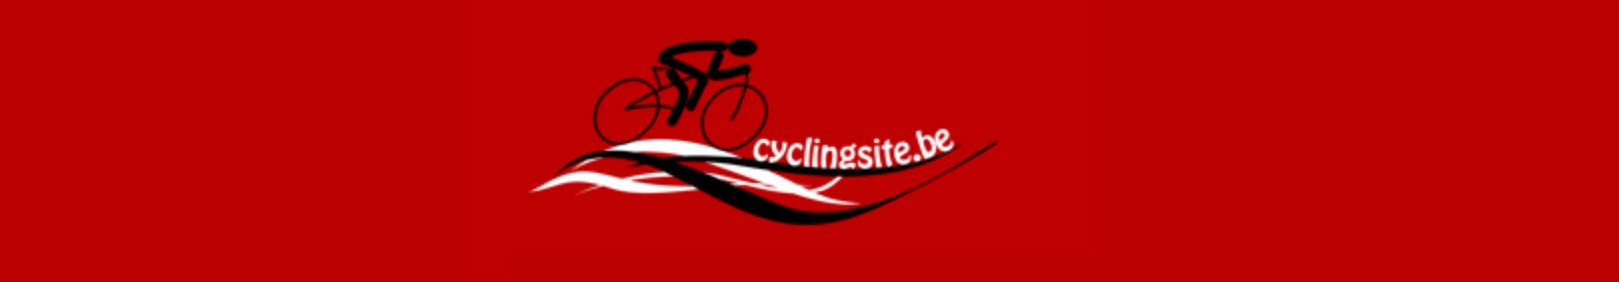 Cyclingsite1